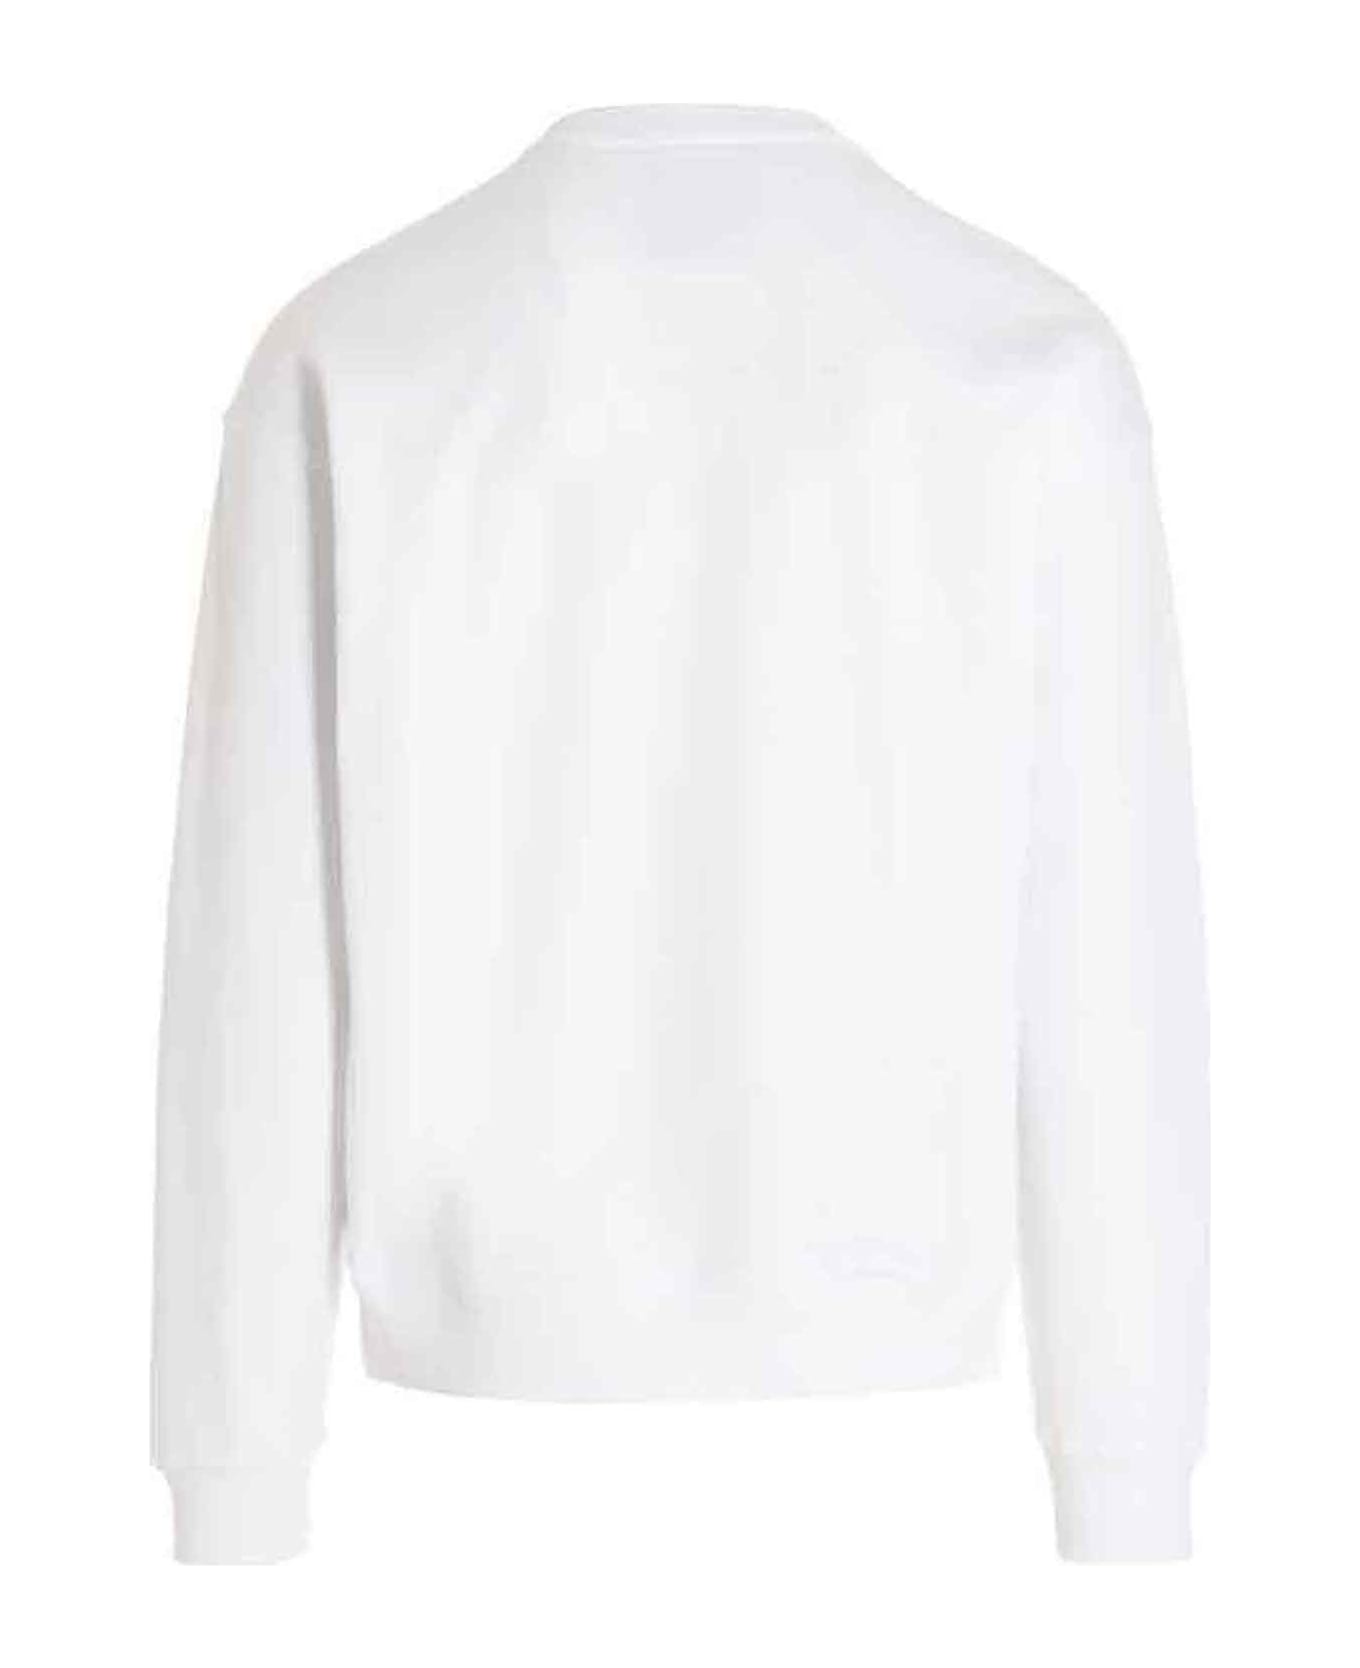 Moschino Maxi Logo Sweatshirt - White/Black